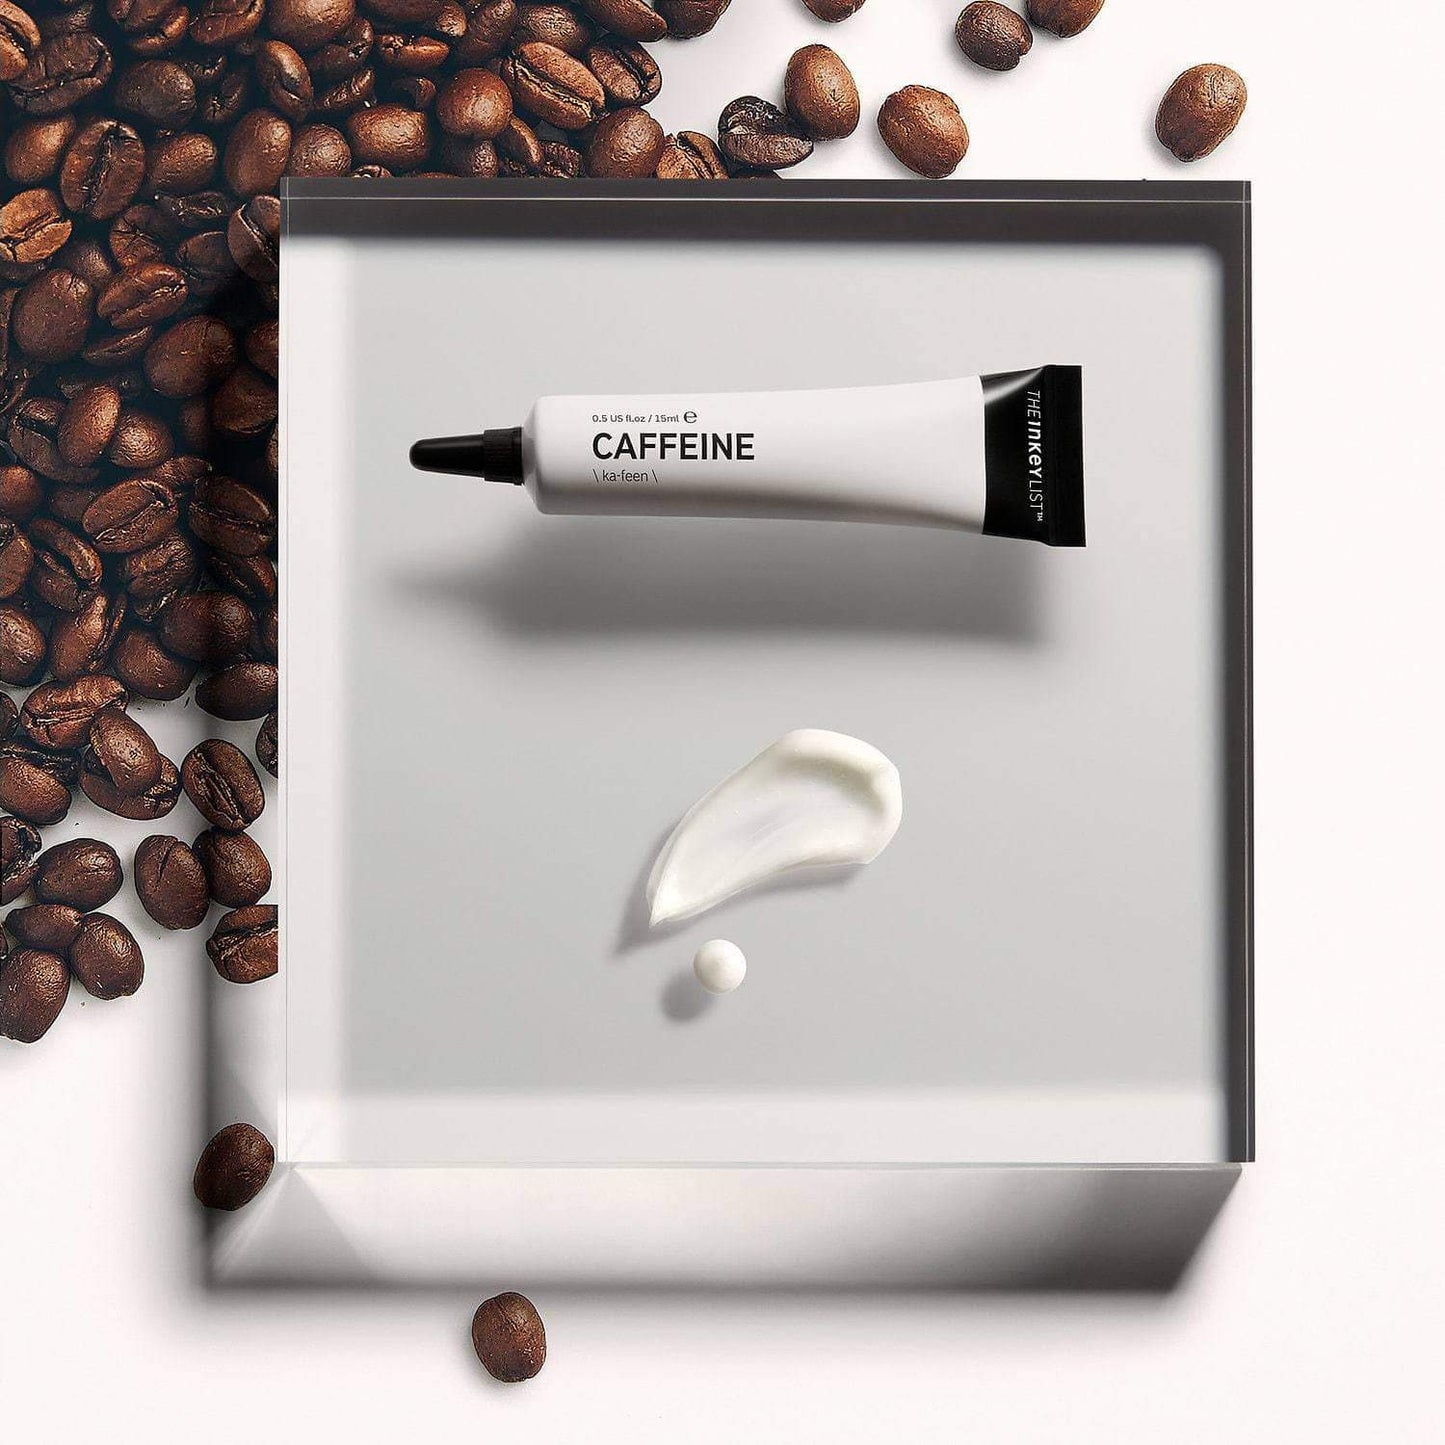 THE INKEY LIST Caffeine Eye Cream Minoustore